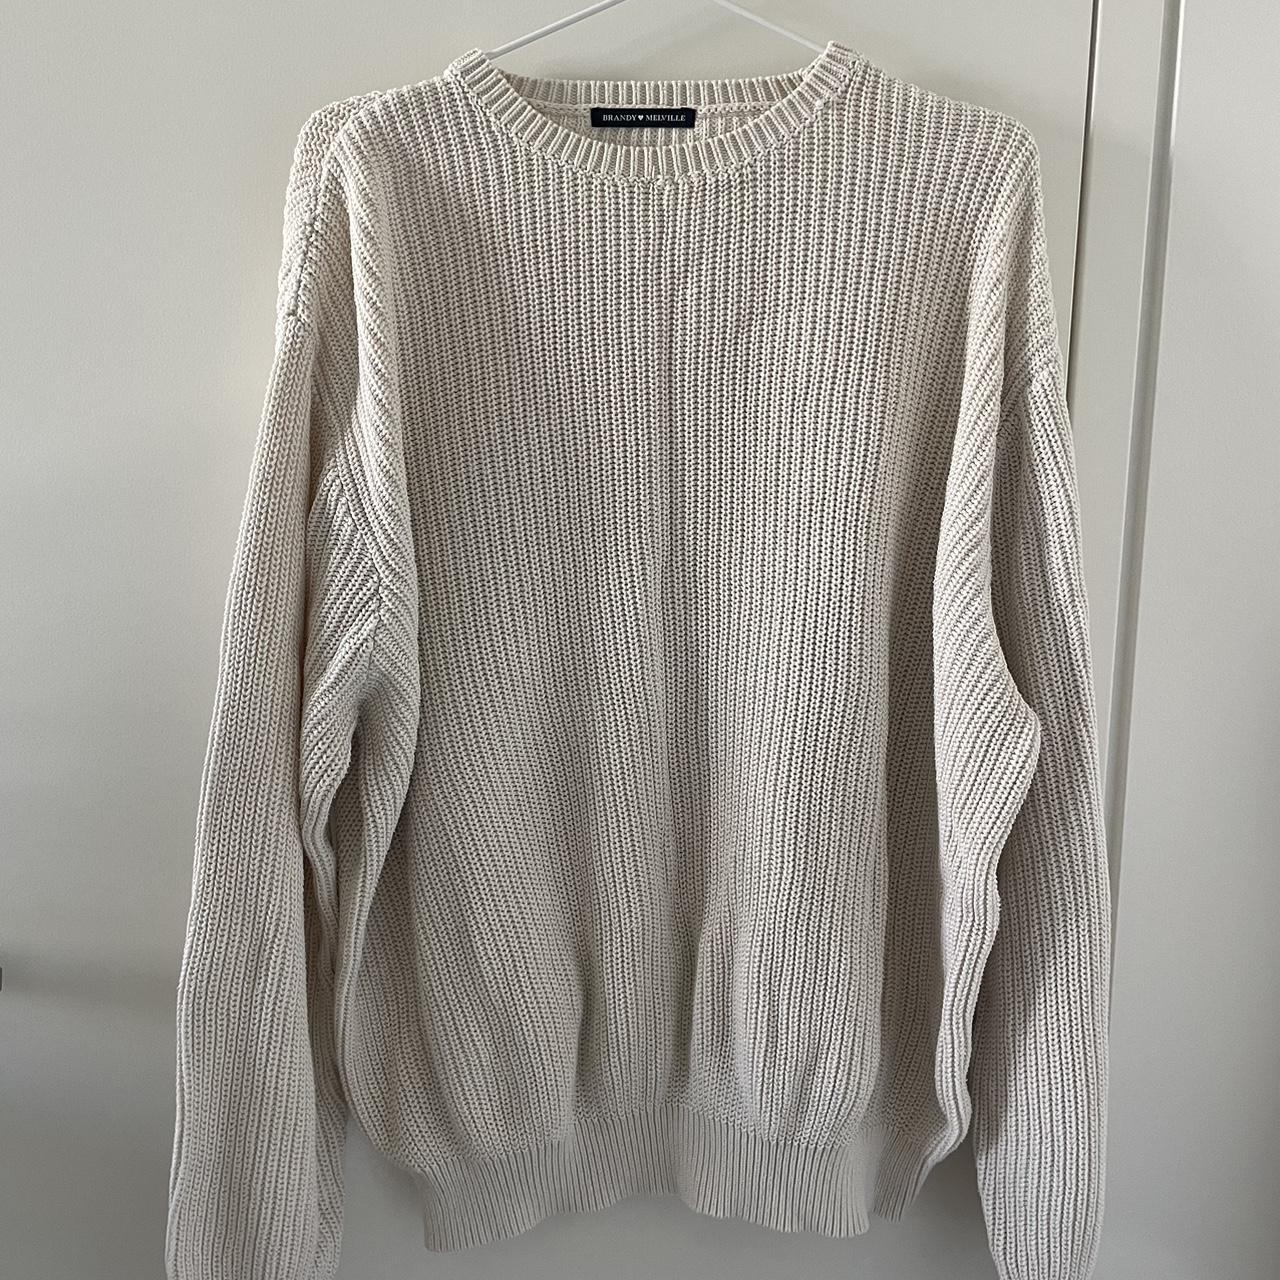 Brandy Melville beige cable knit light sweatshirt.... - Depop